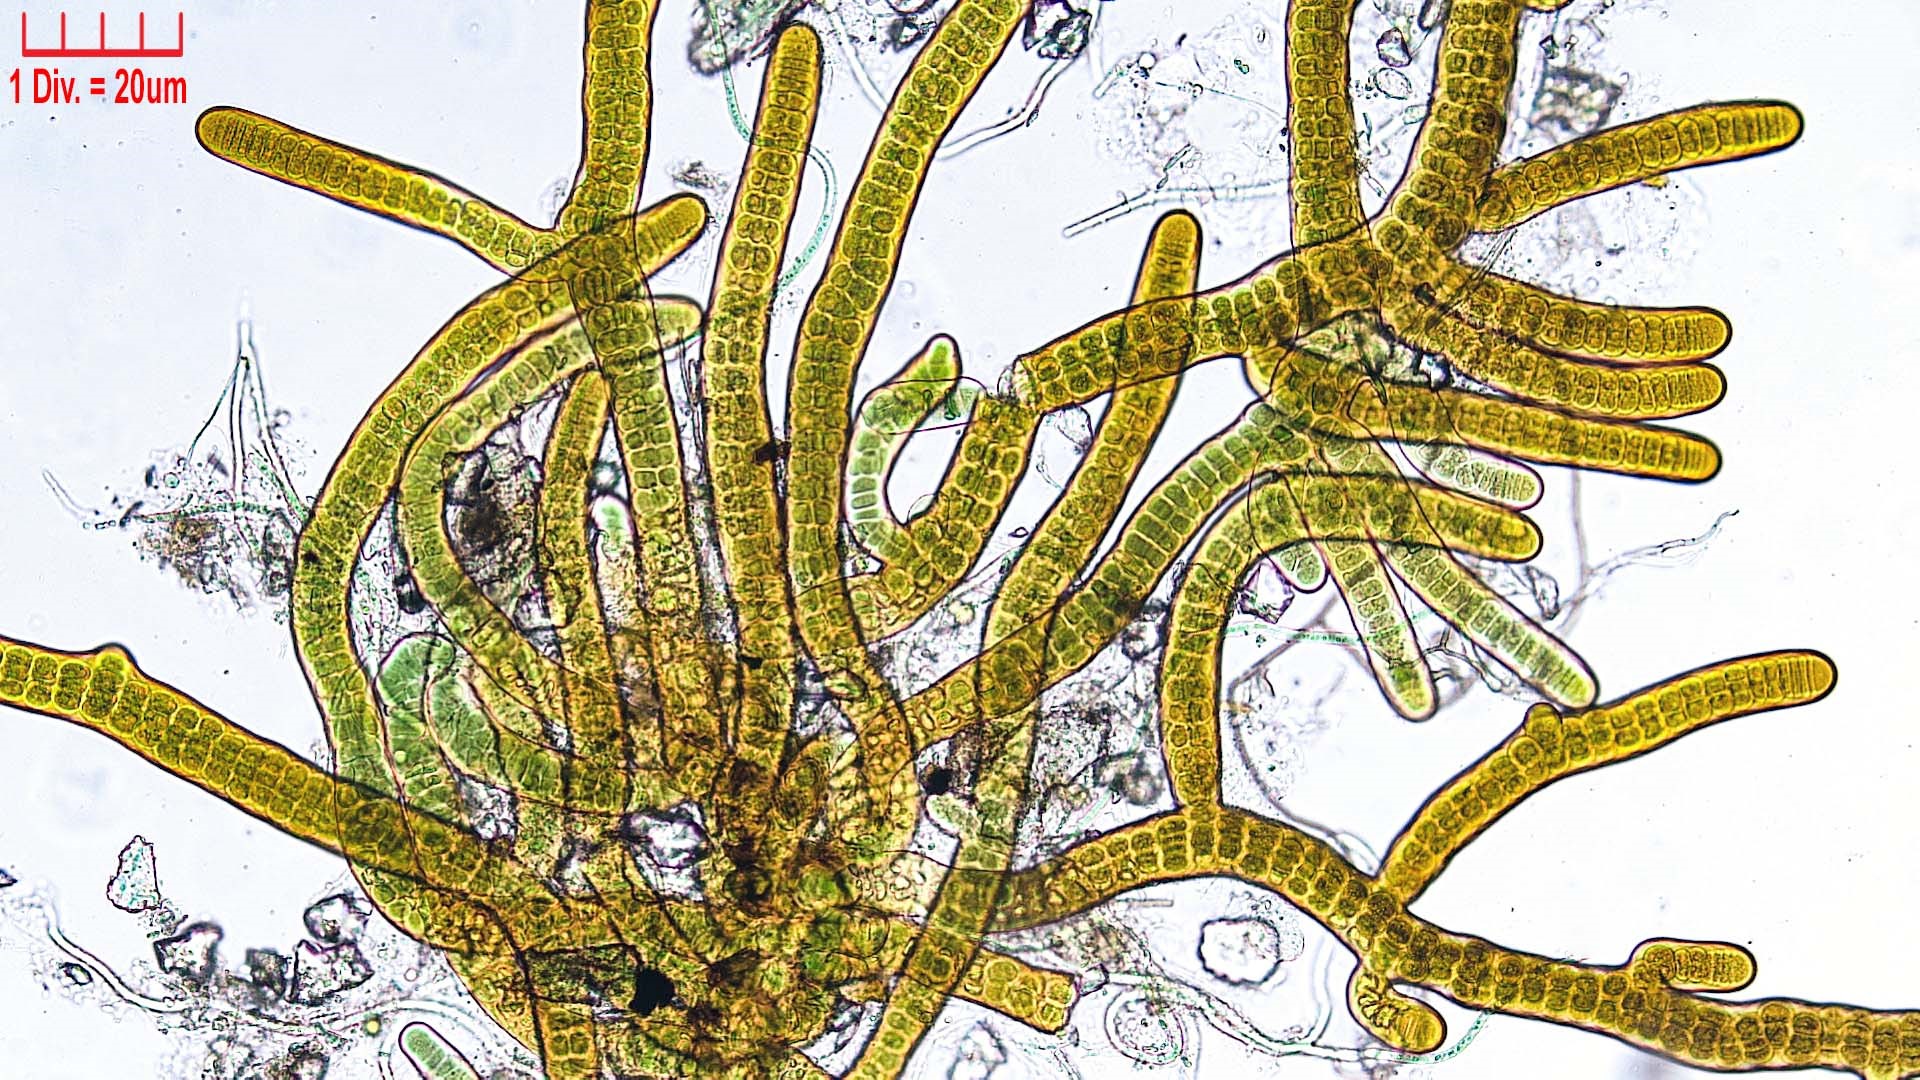 ./Cyanobacteria/Nostocales/Stigonemataceae/Stigonema/turfaceum/stigonema-turfaceum-522.jpg